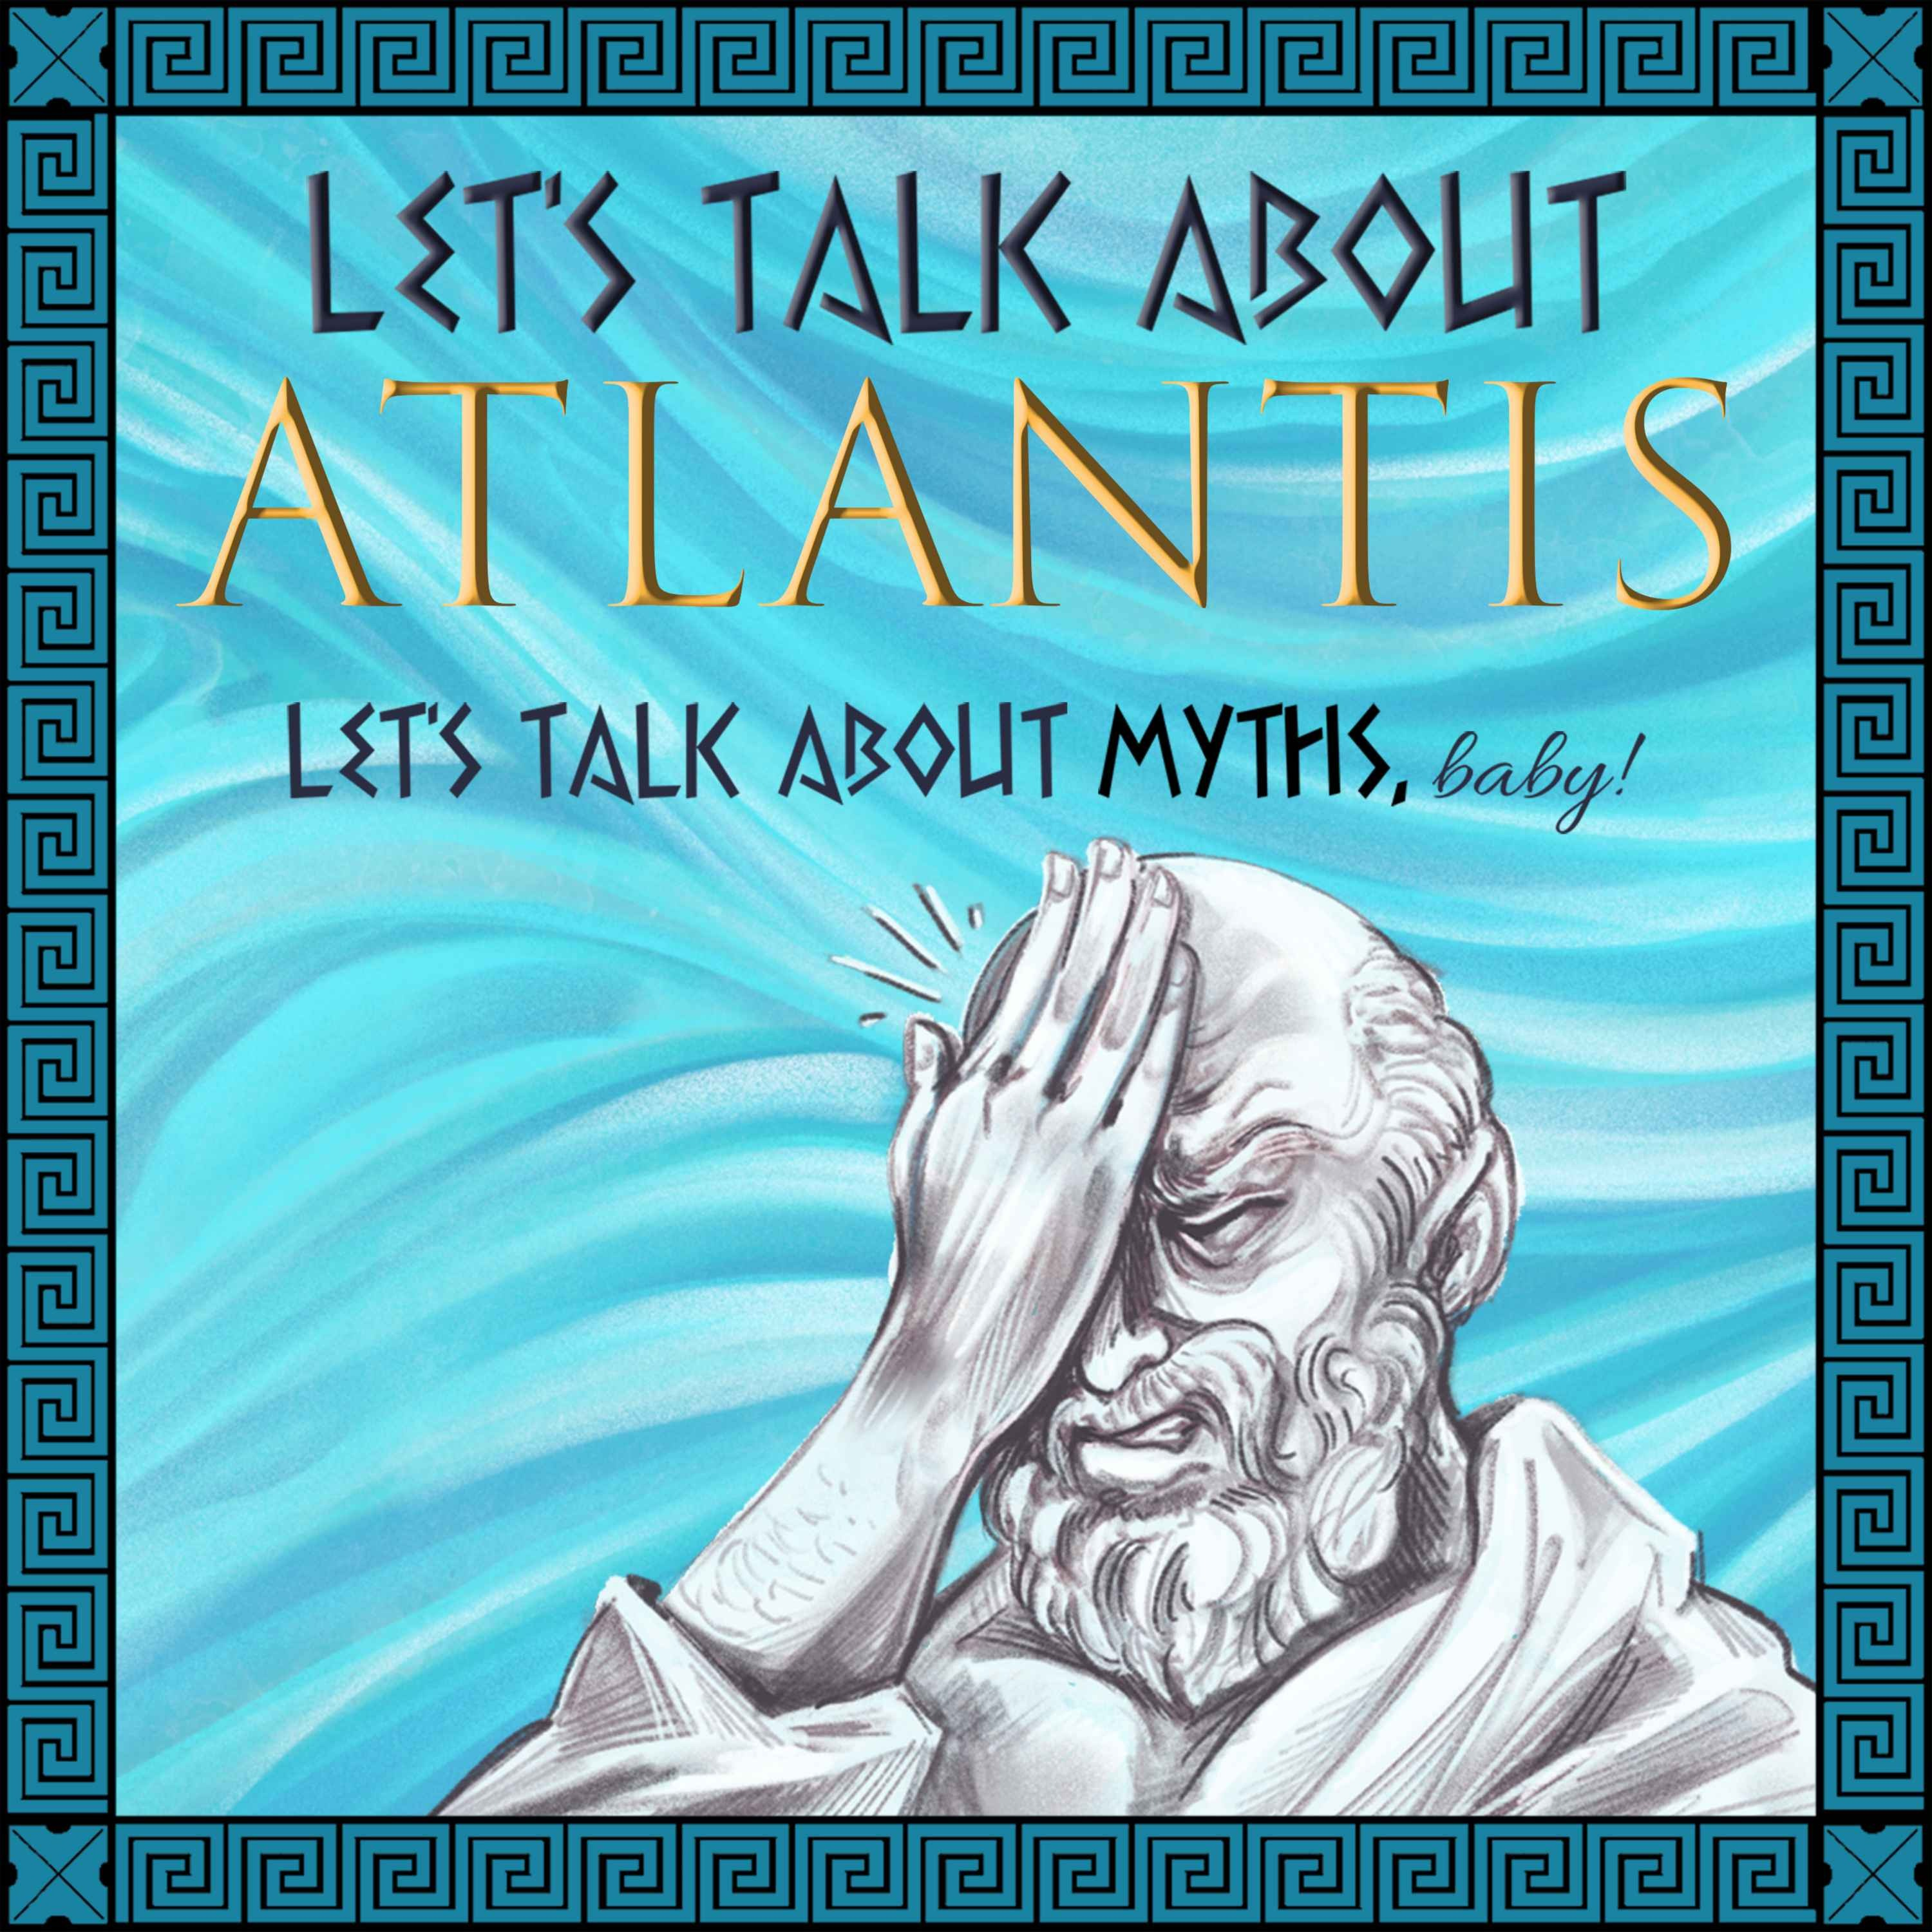 Deconstructing Atlantis: What Makes a Myth? Plato’s Allegorical Atlantis (Part 2)